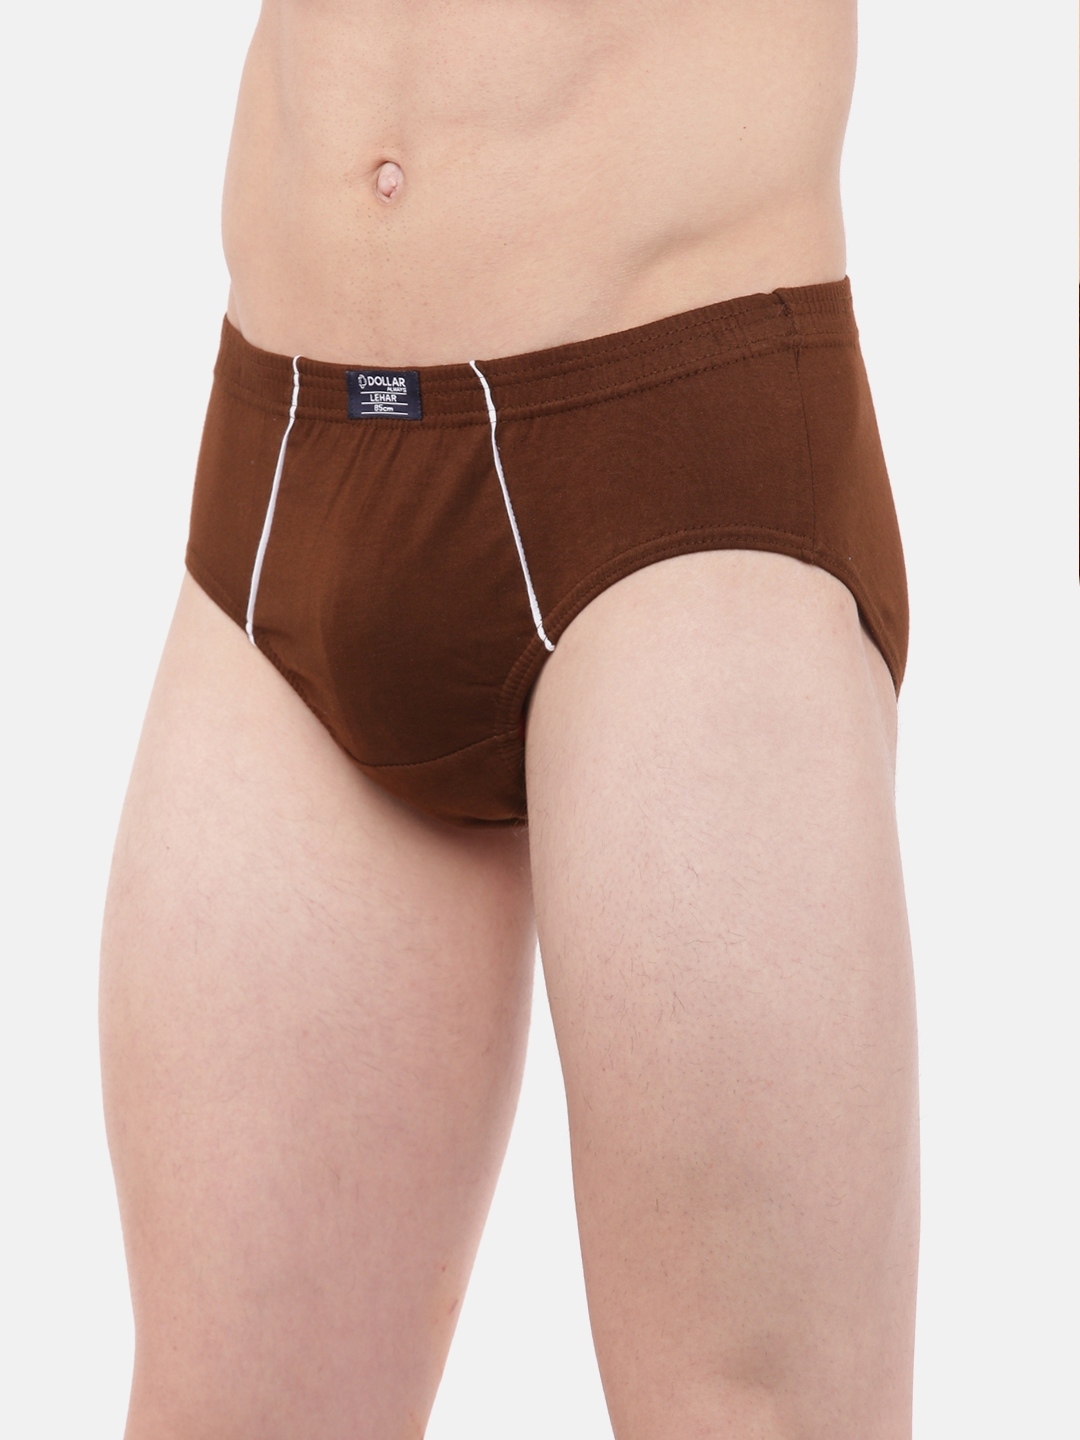 Dollar Lehar Men's Underwear Long Trunk (T/E) - Pack of 4 - BAGDA BAZAAR